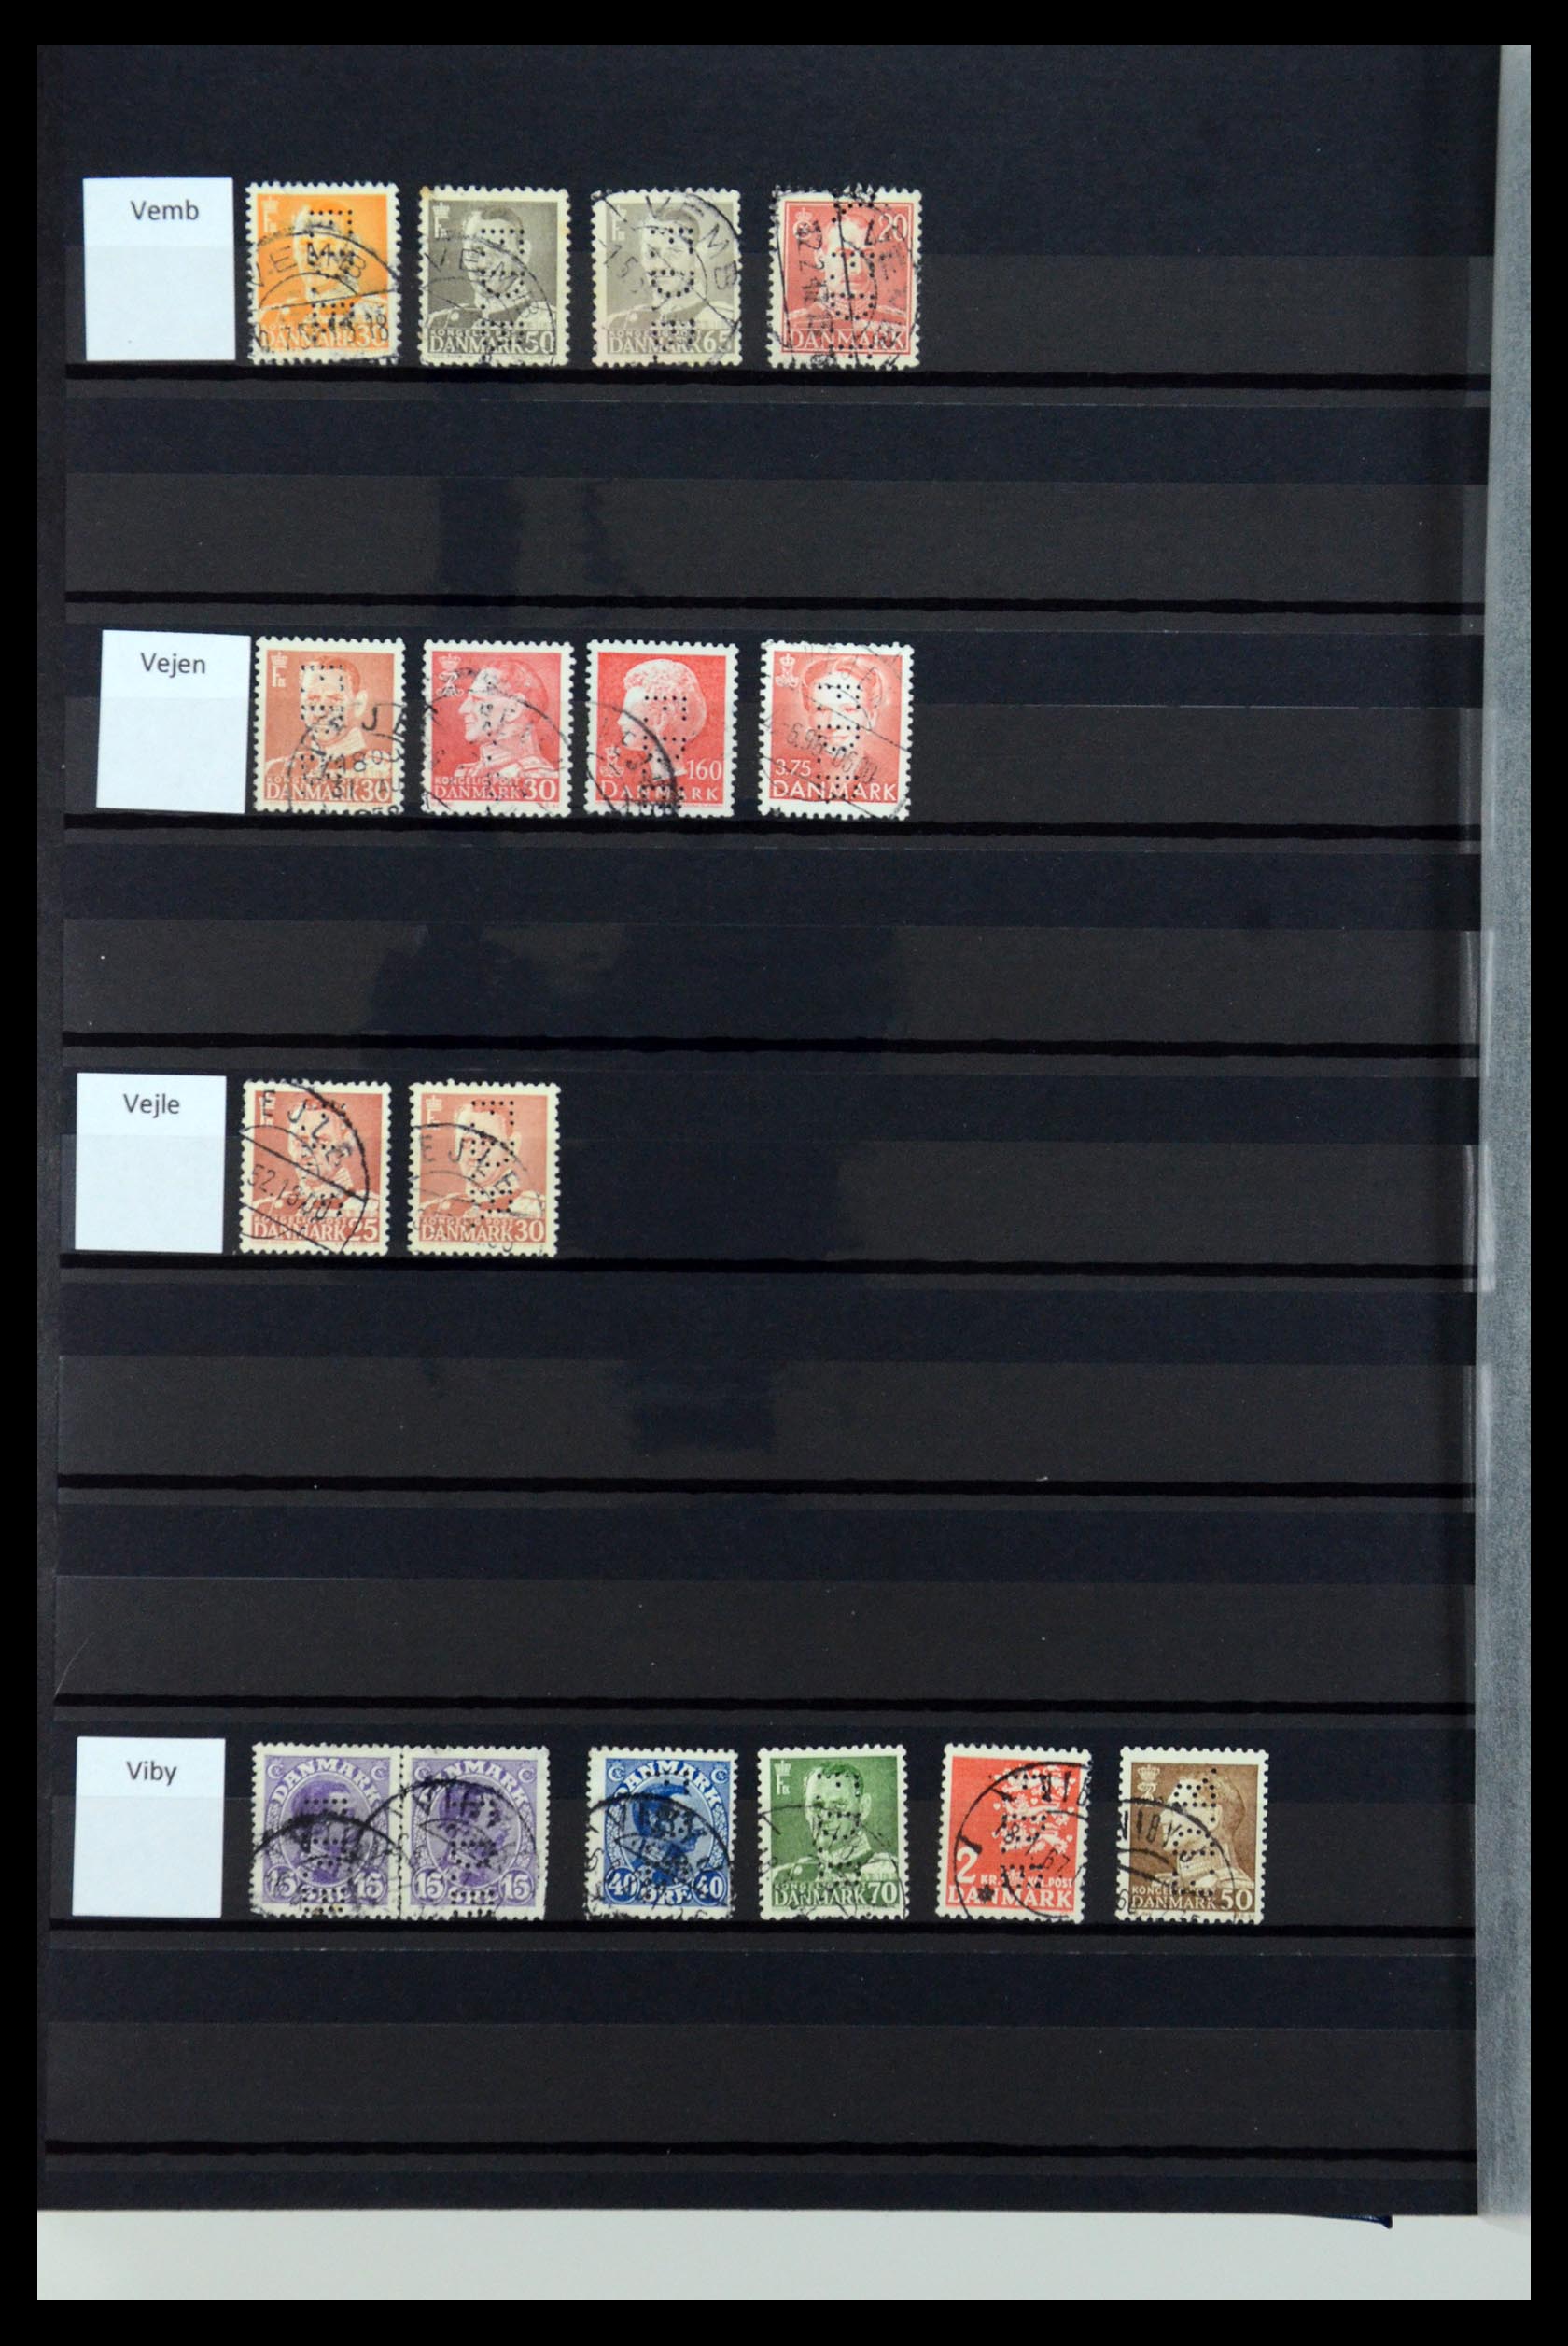 36396 074 - Stamp collection 36396 Denmark perfins.